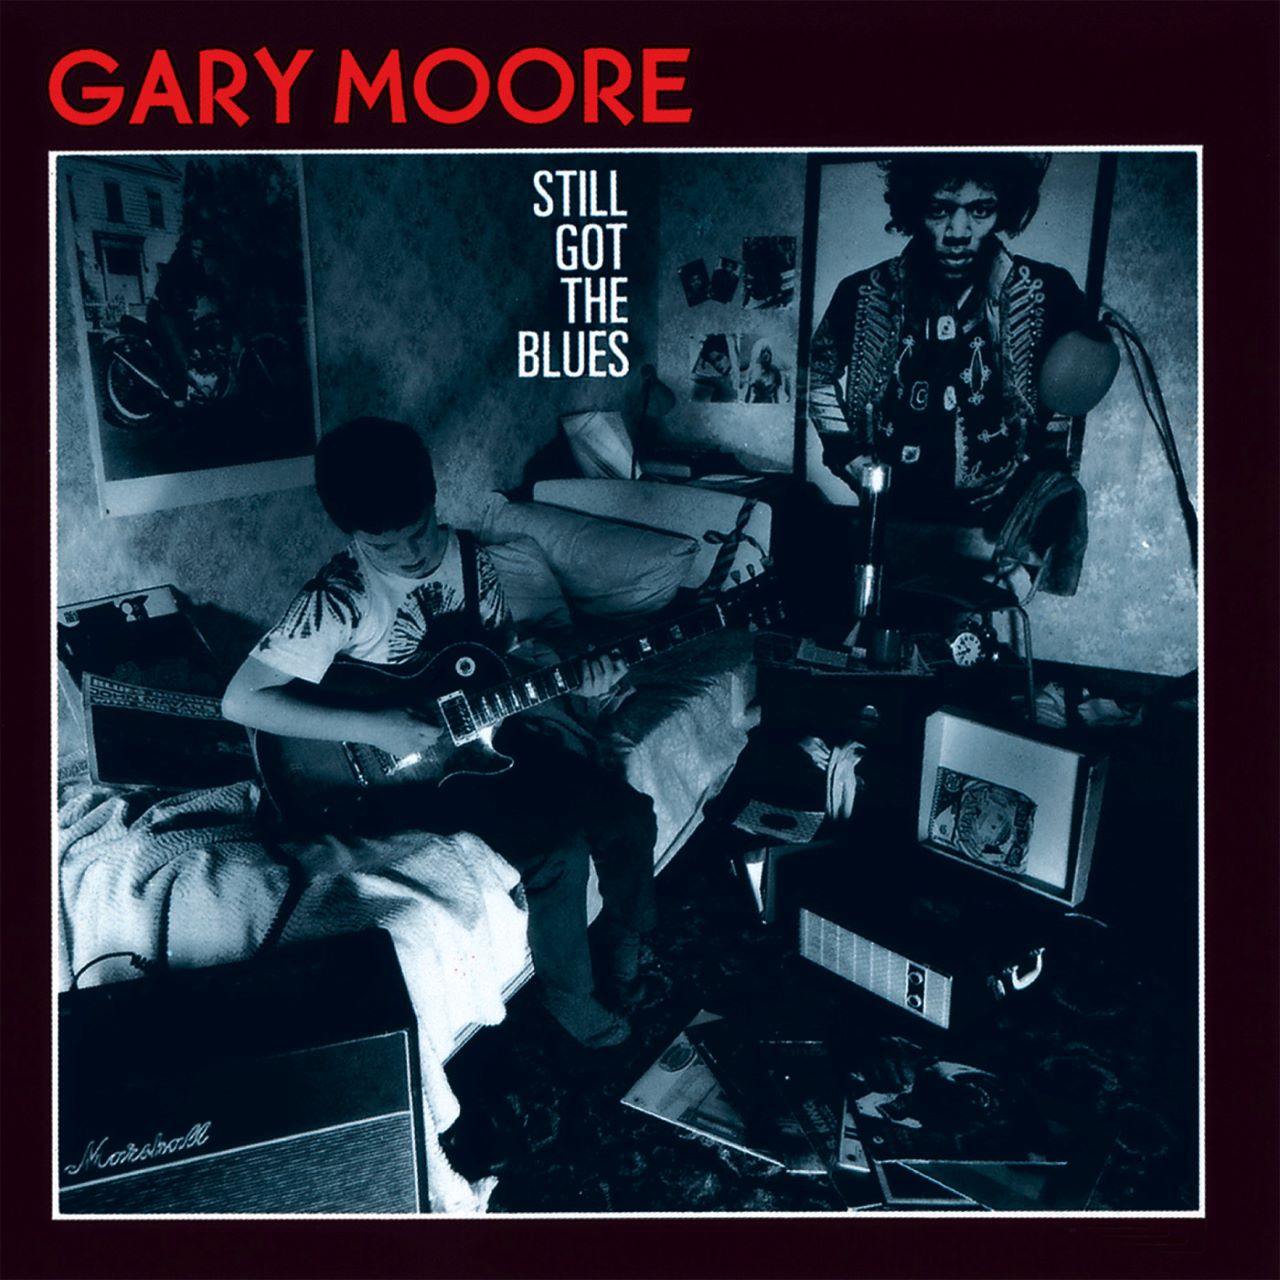 Gary Moore – Still Got The Blues cover album